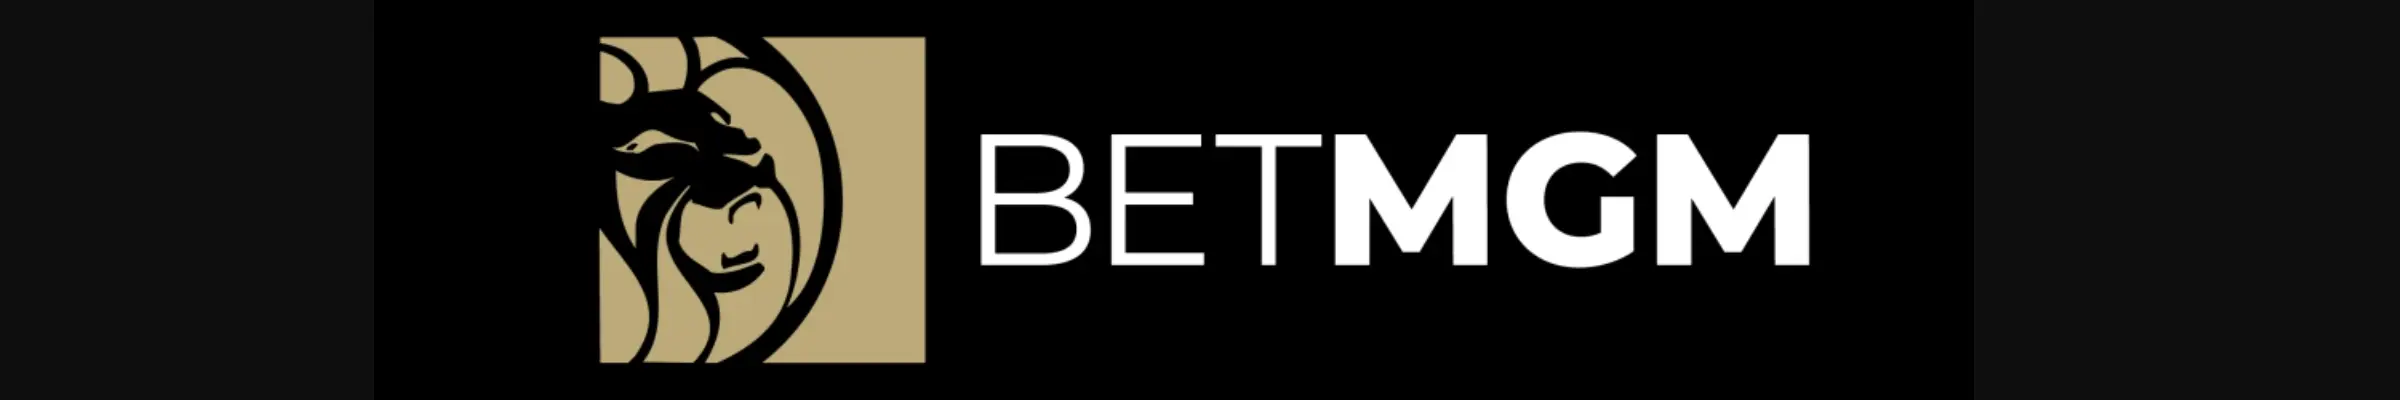 BetMGM Large Wide Logo